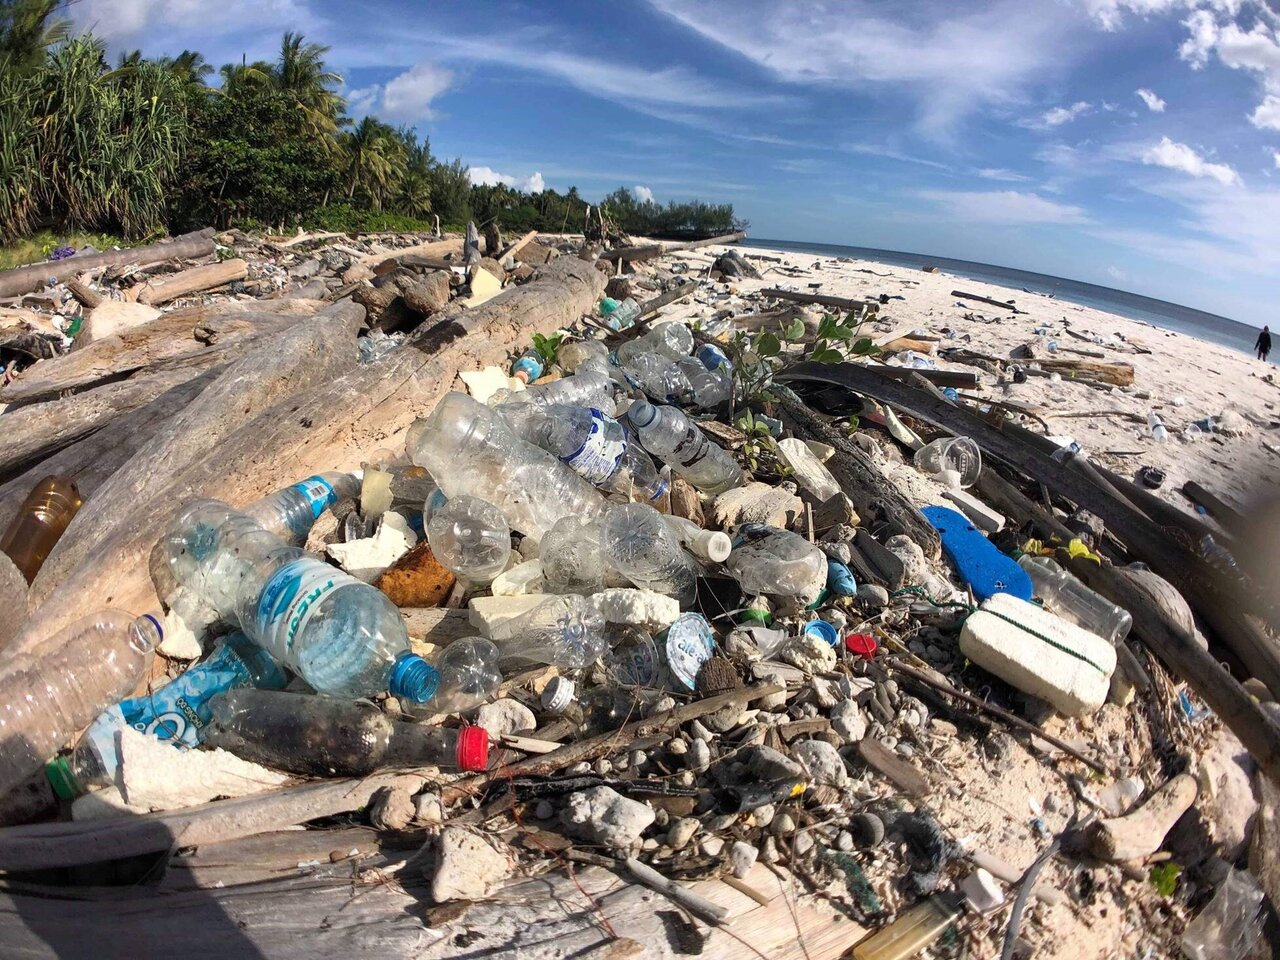 Indonesia's coastal communities shoulder the impacts of ocean plastic